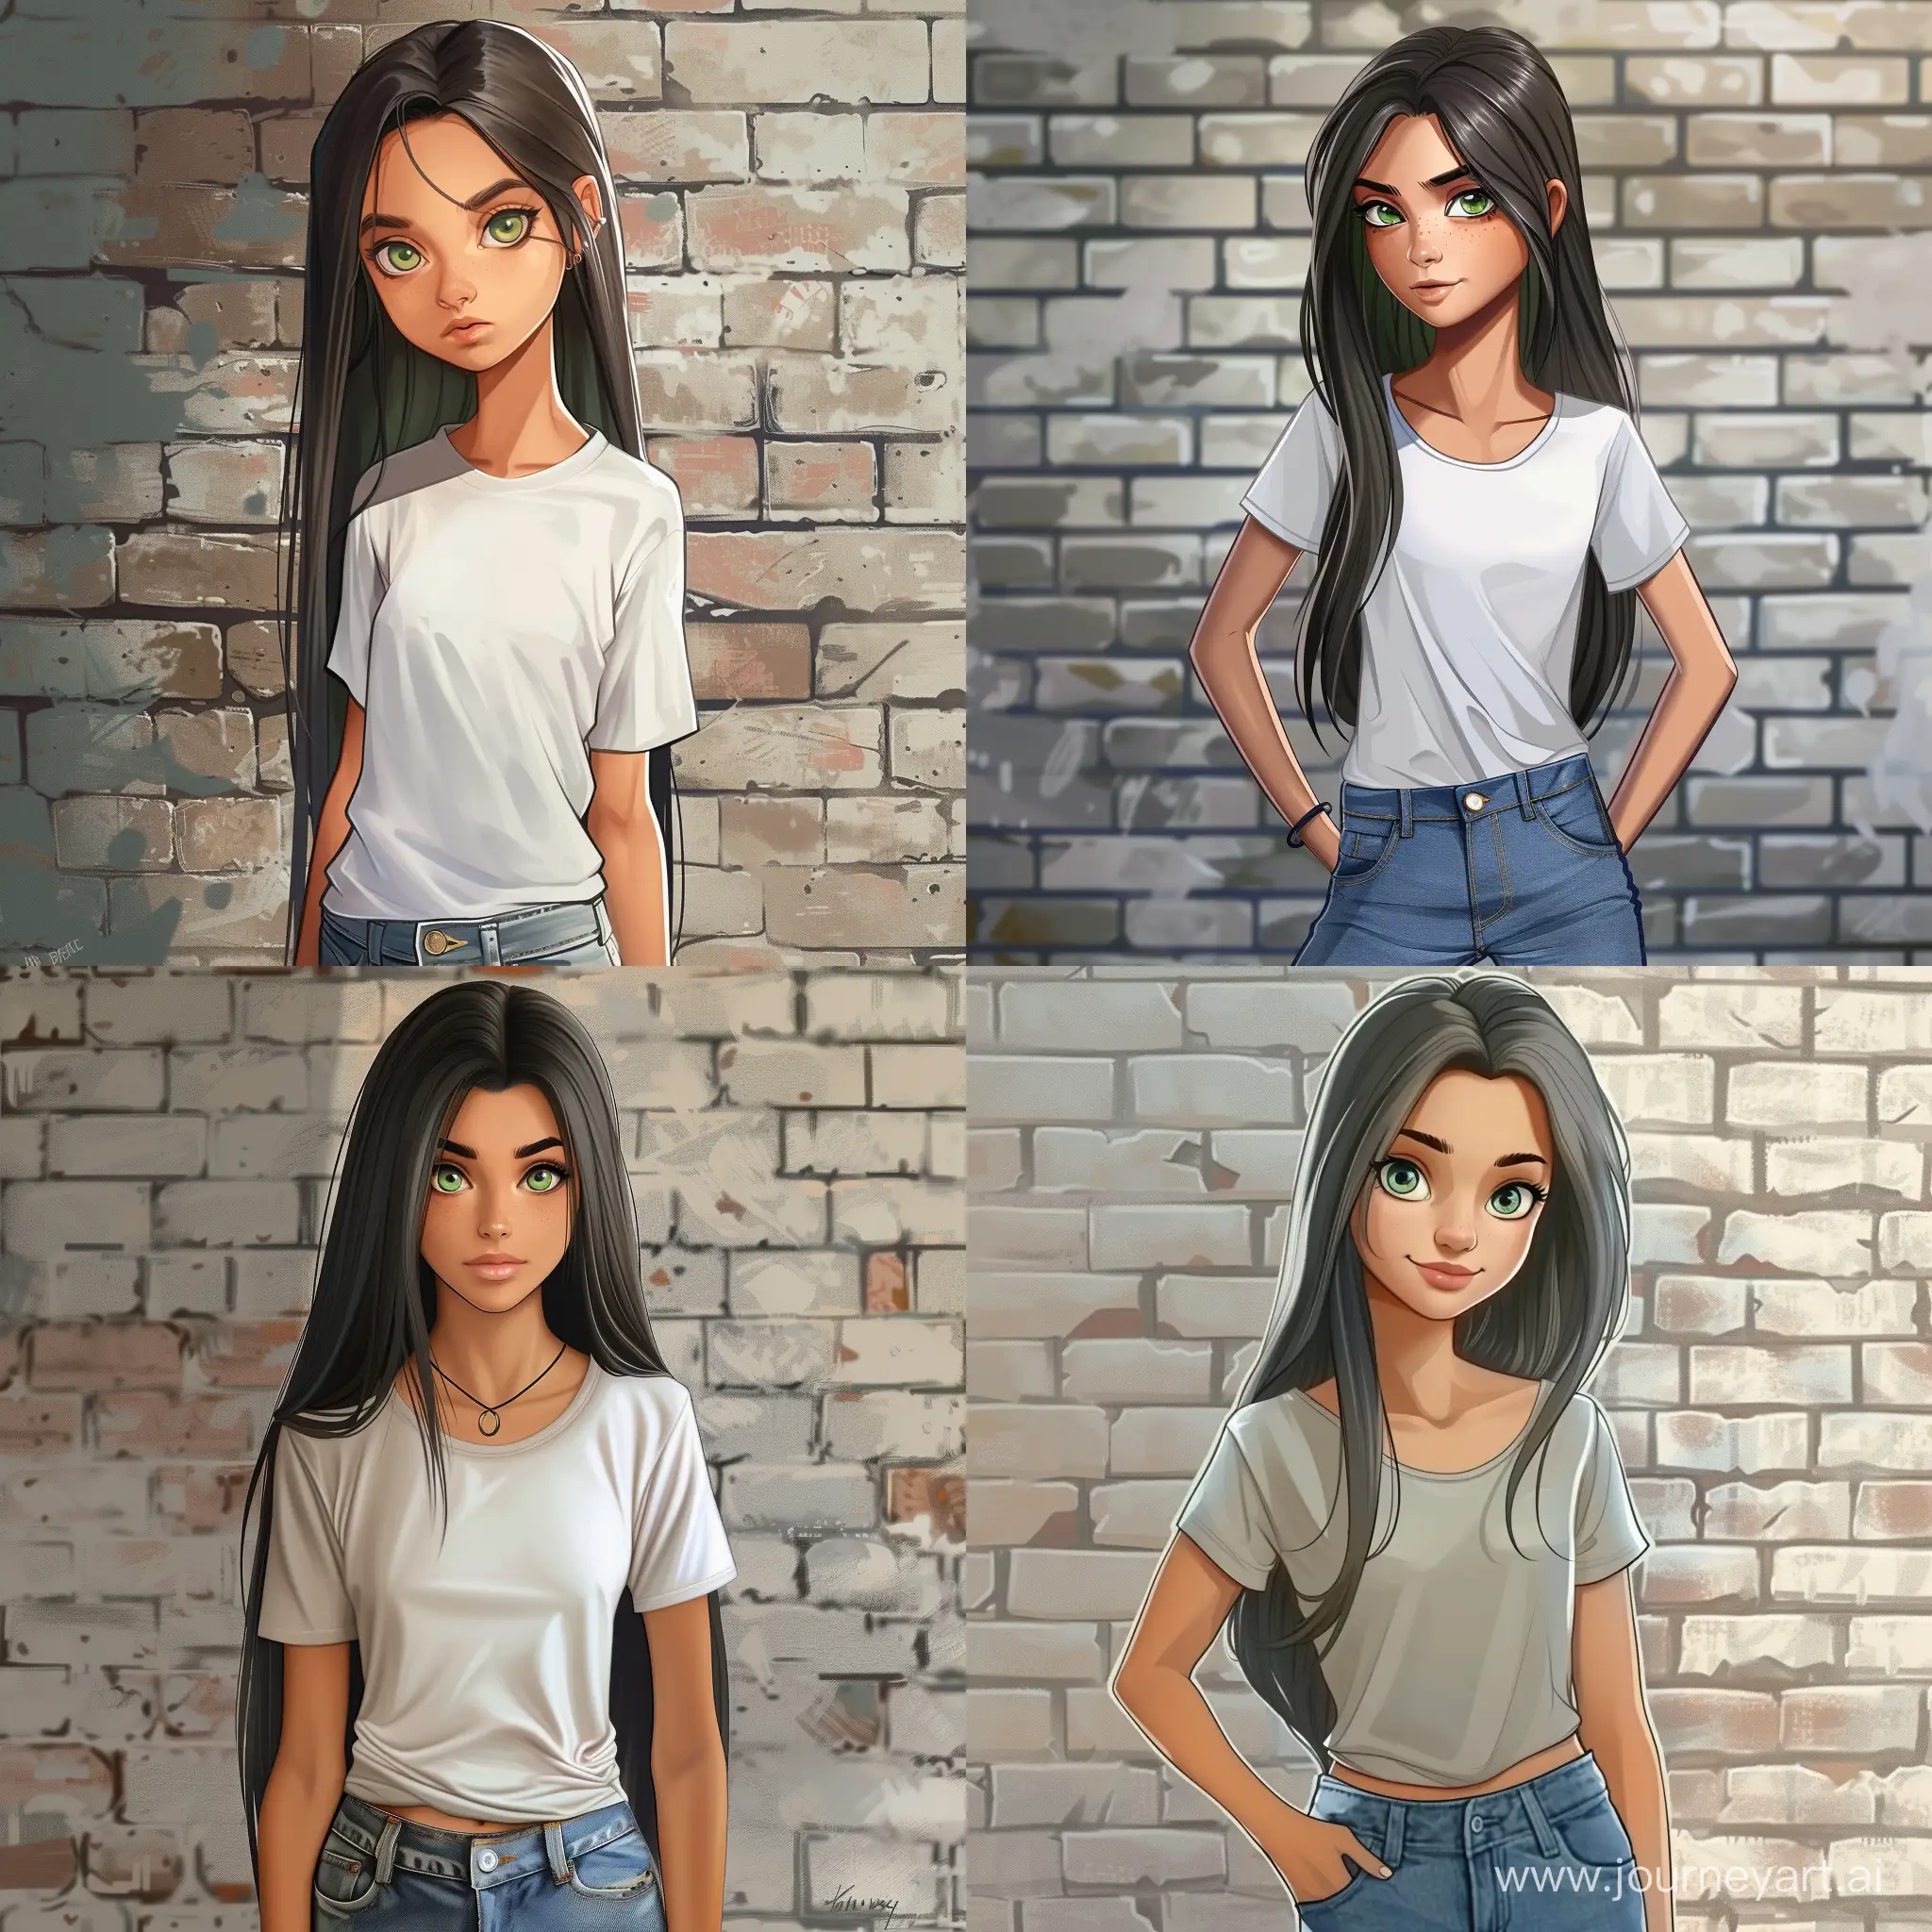 Stylish-Teenage-Girl-with-Dark-Hair-Against-Brick-Wall